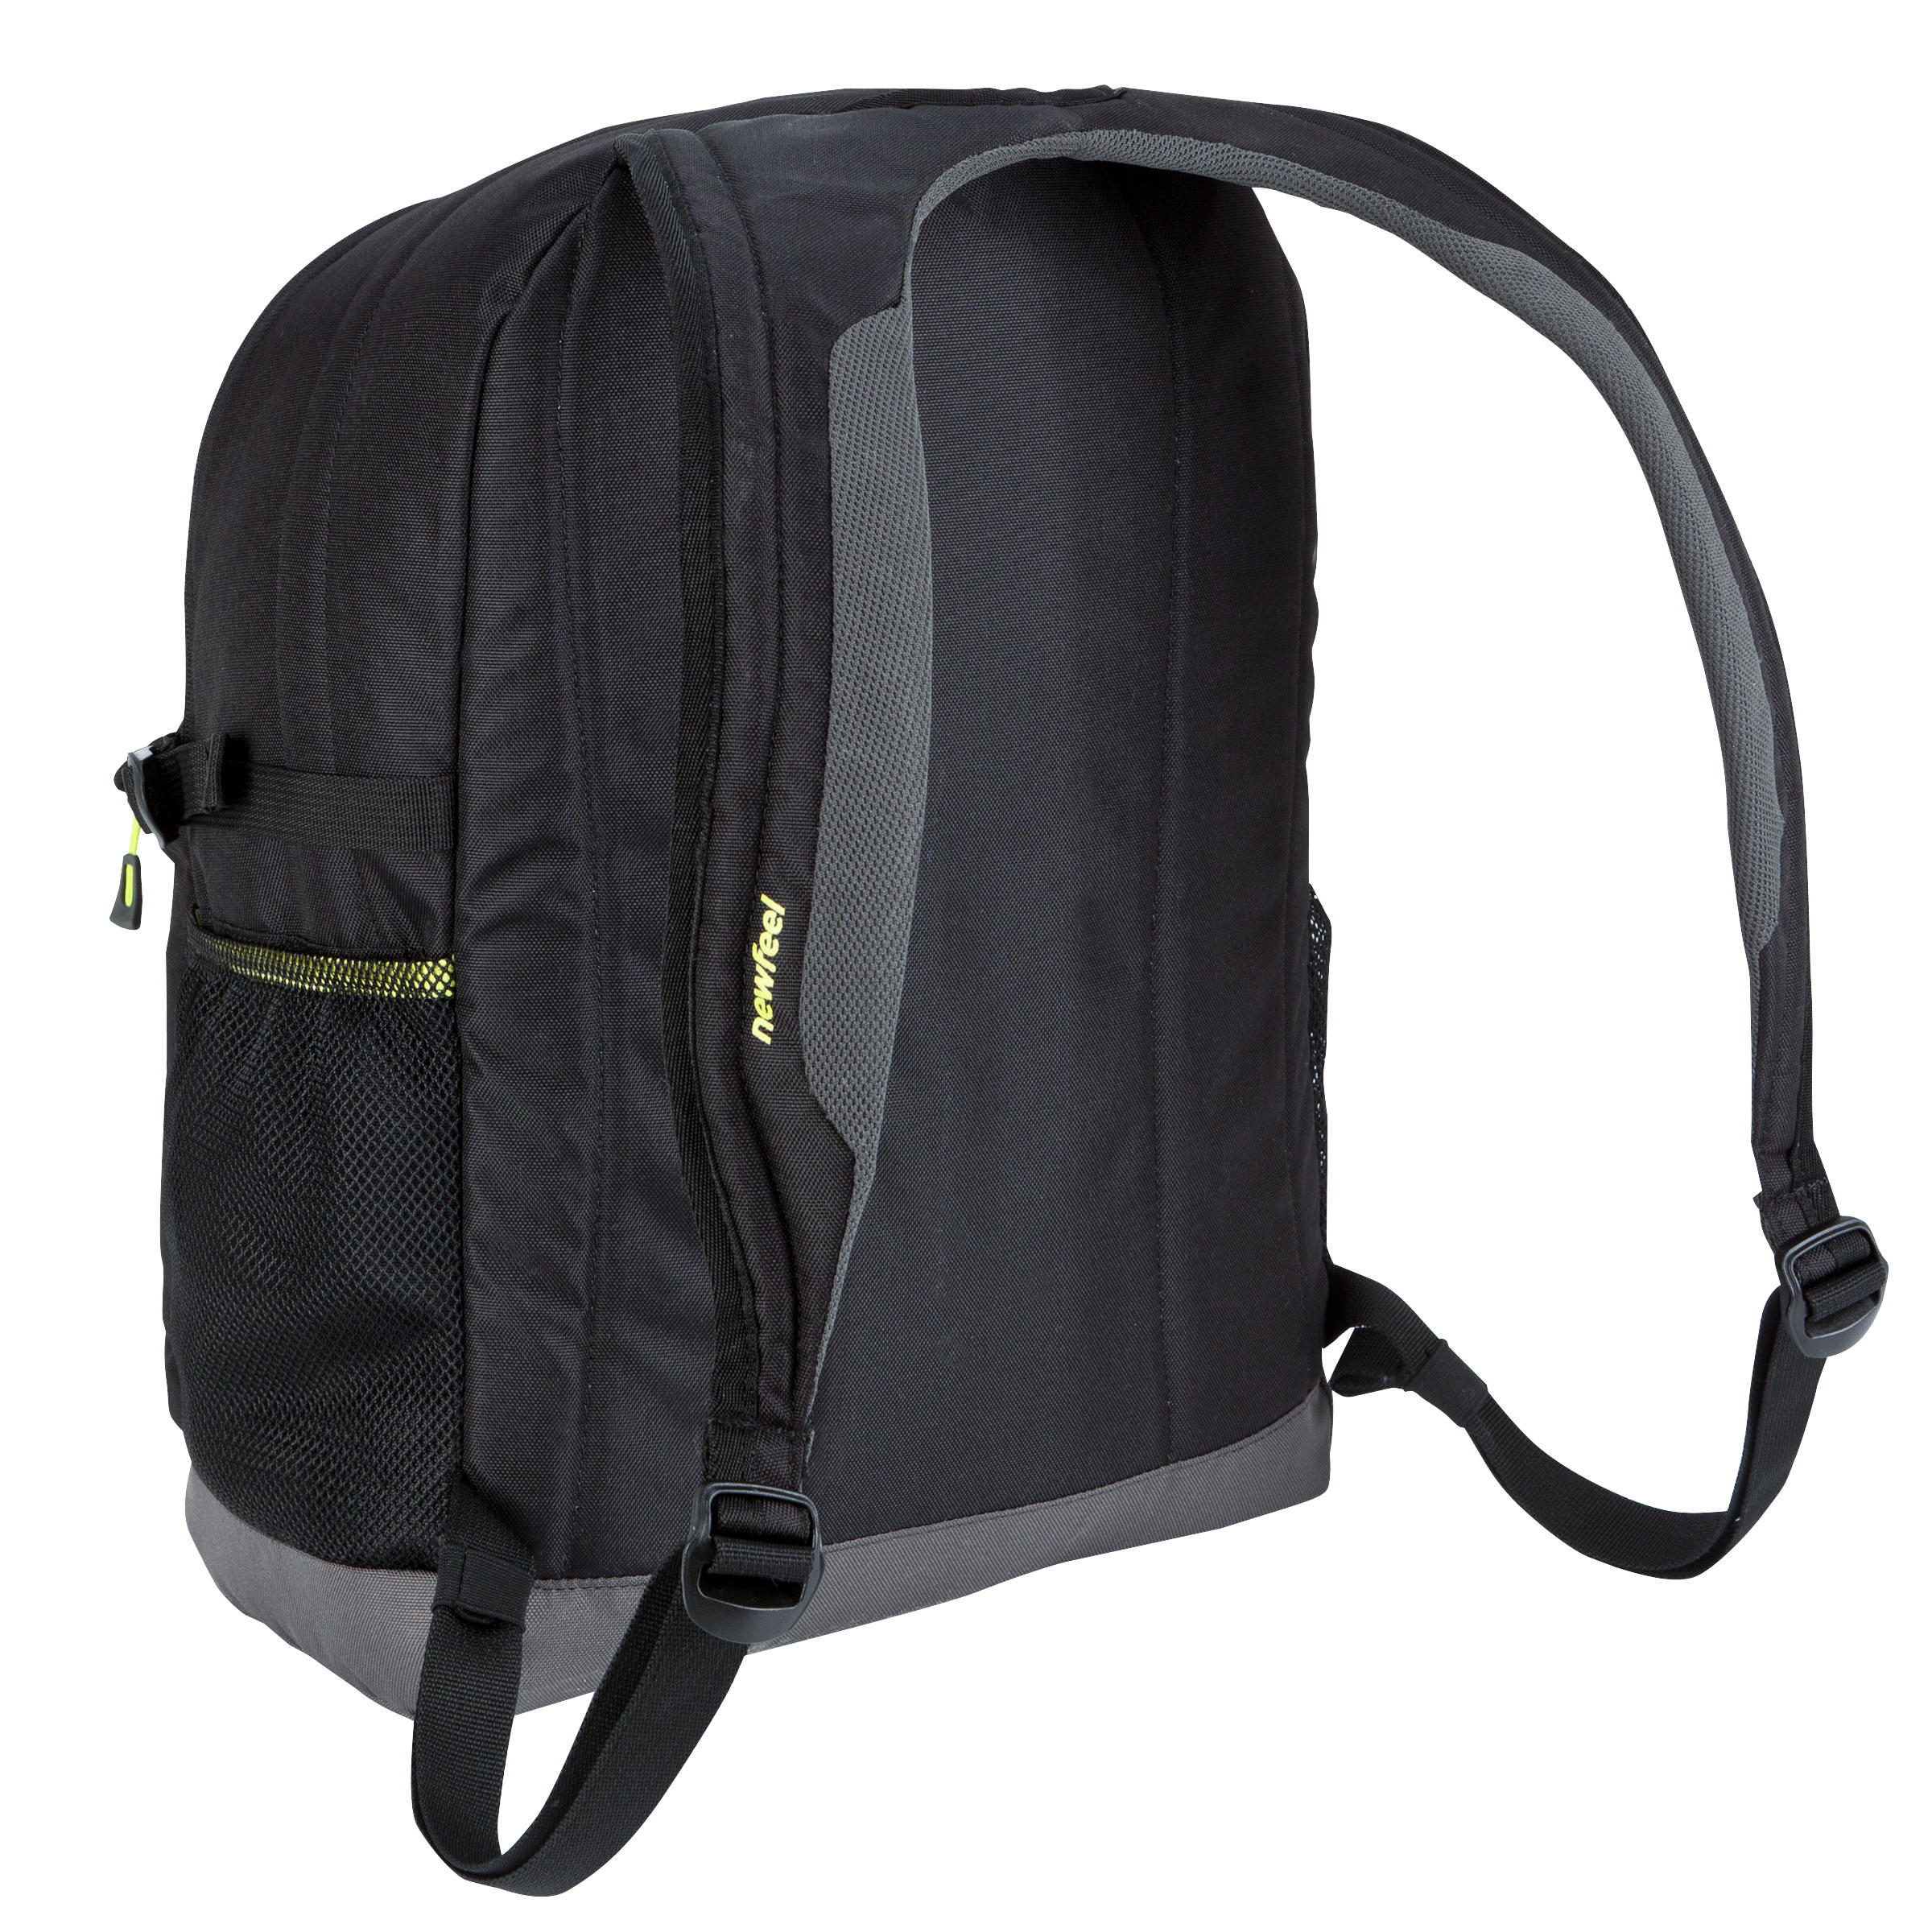 Reebok Sienna Backpack for sale online | eBay